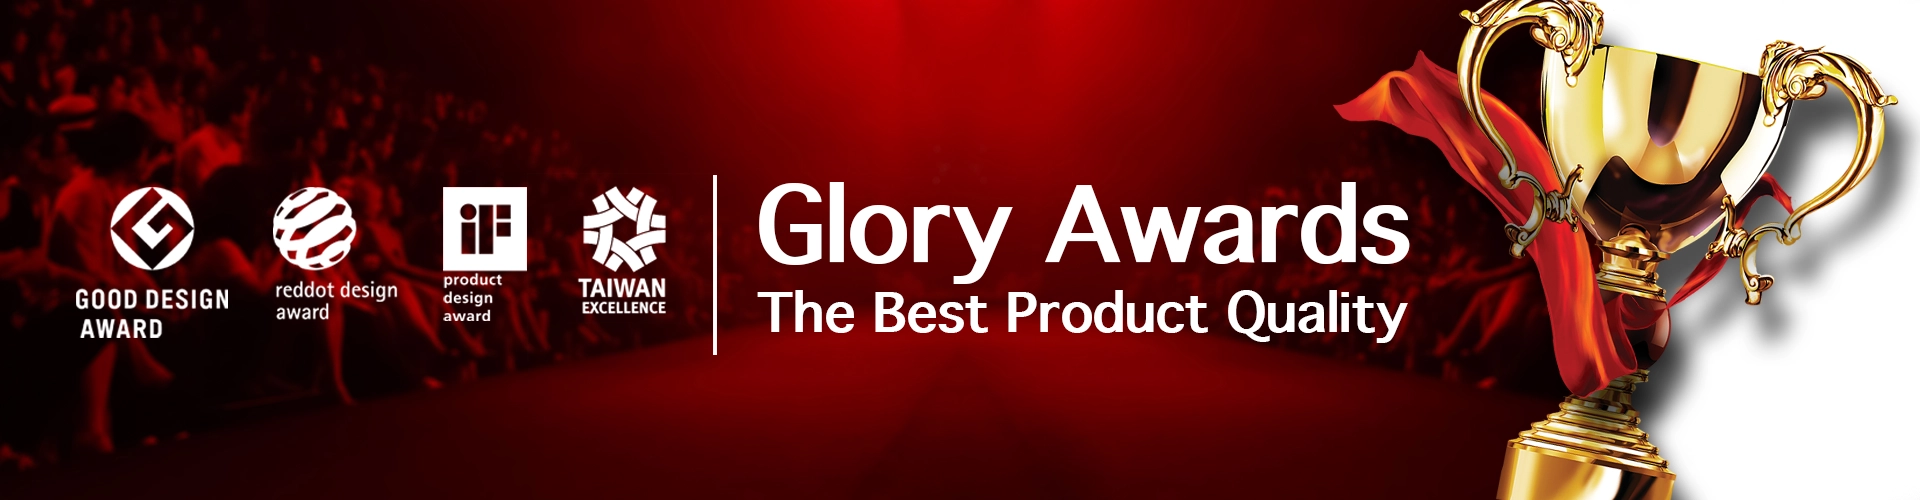 ZEBEX,glory_awards,the_best_product_quality